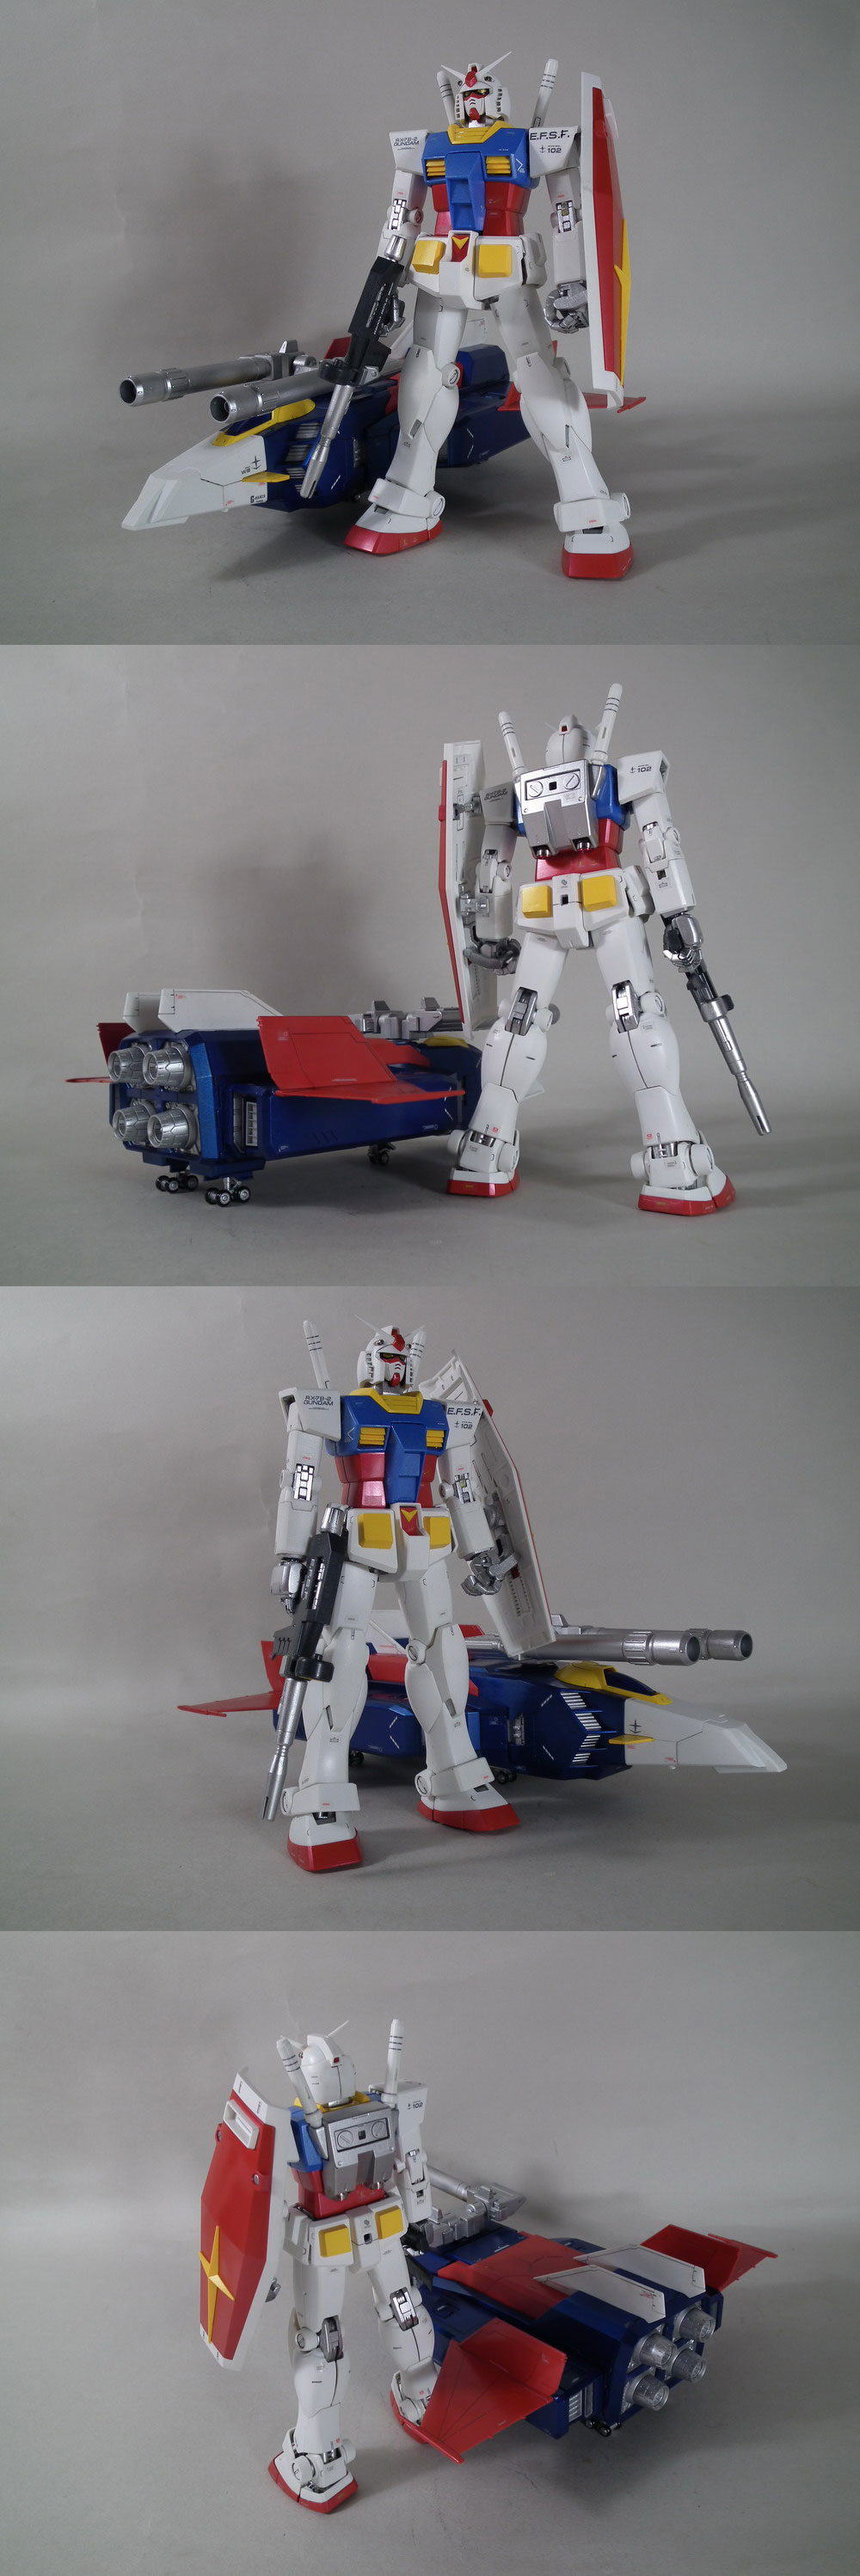 MG 1/100 RX-78-2 Gundam Ver.2.0 + G-Fighter: Assembled/Painted